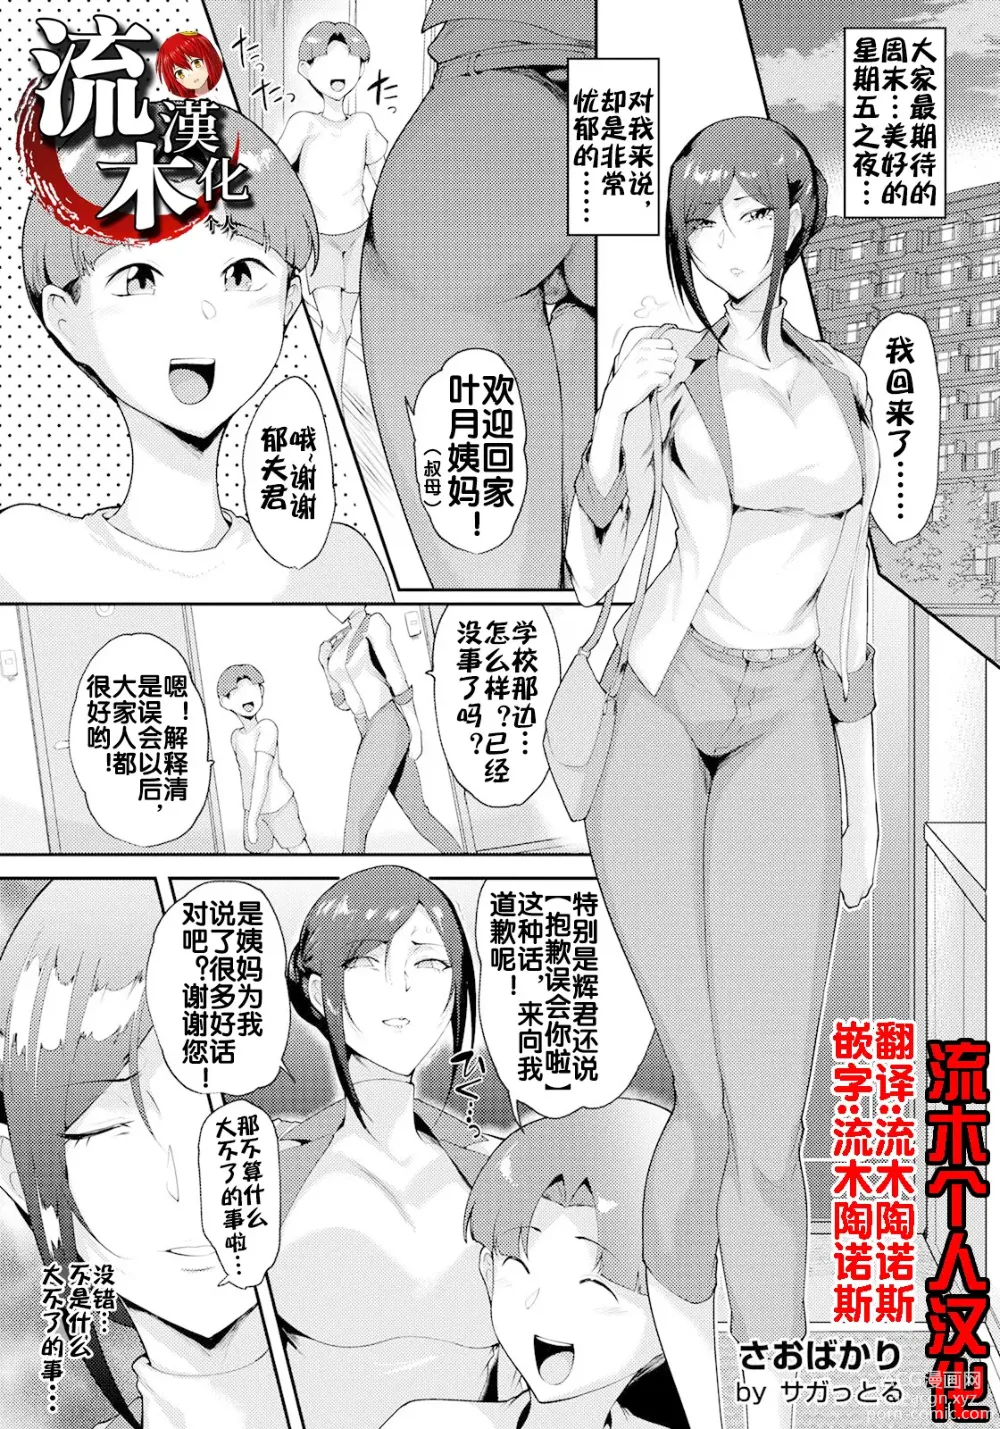 Page 5 of manga Saobakari